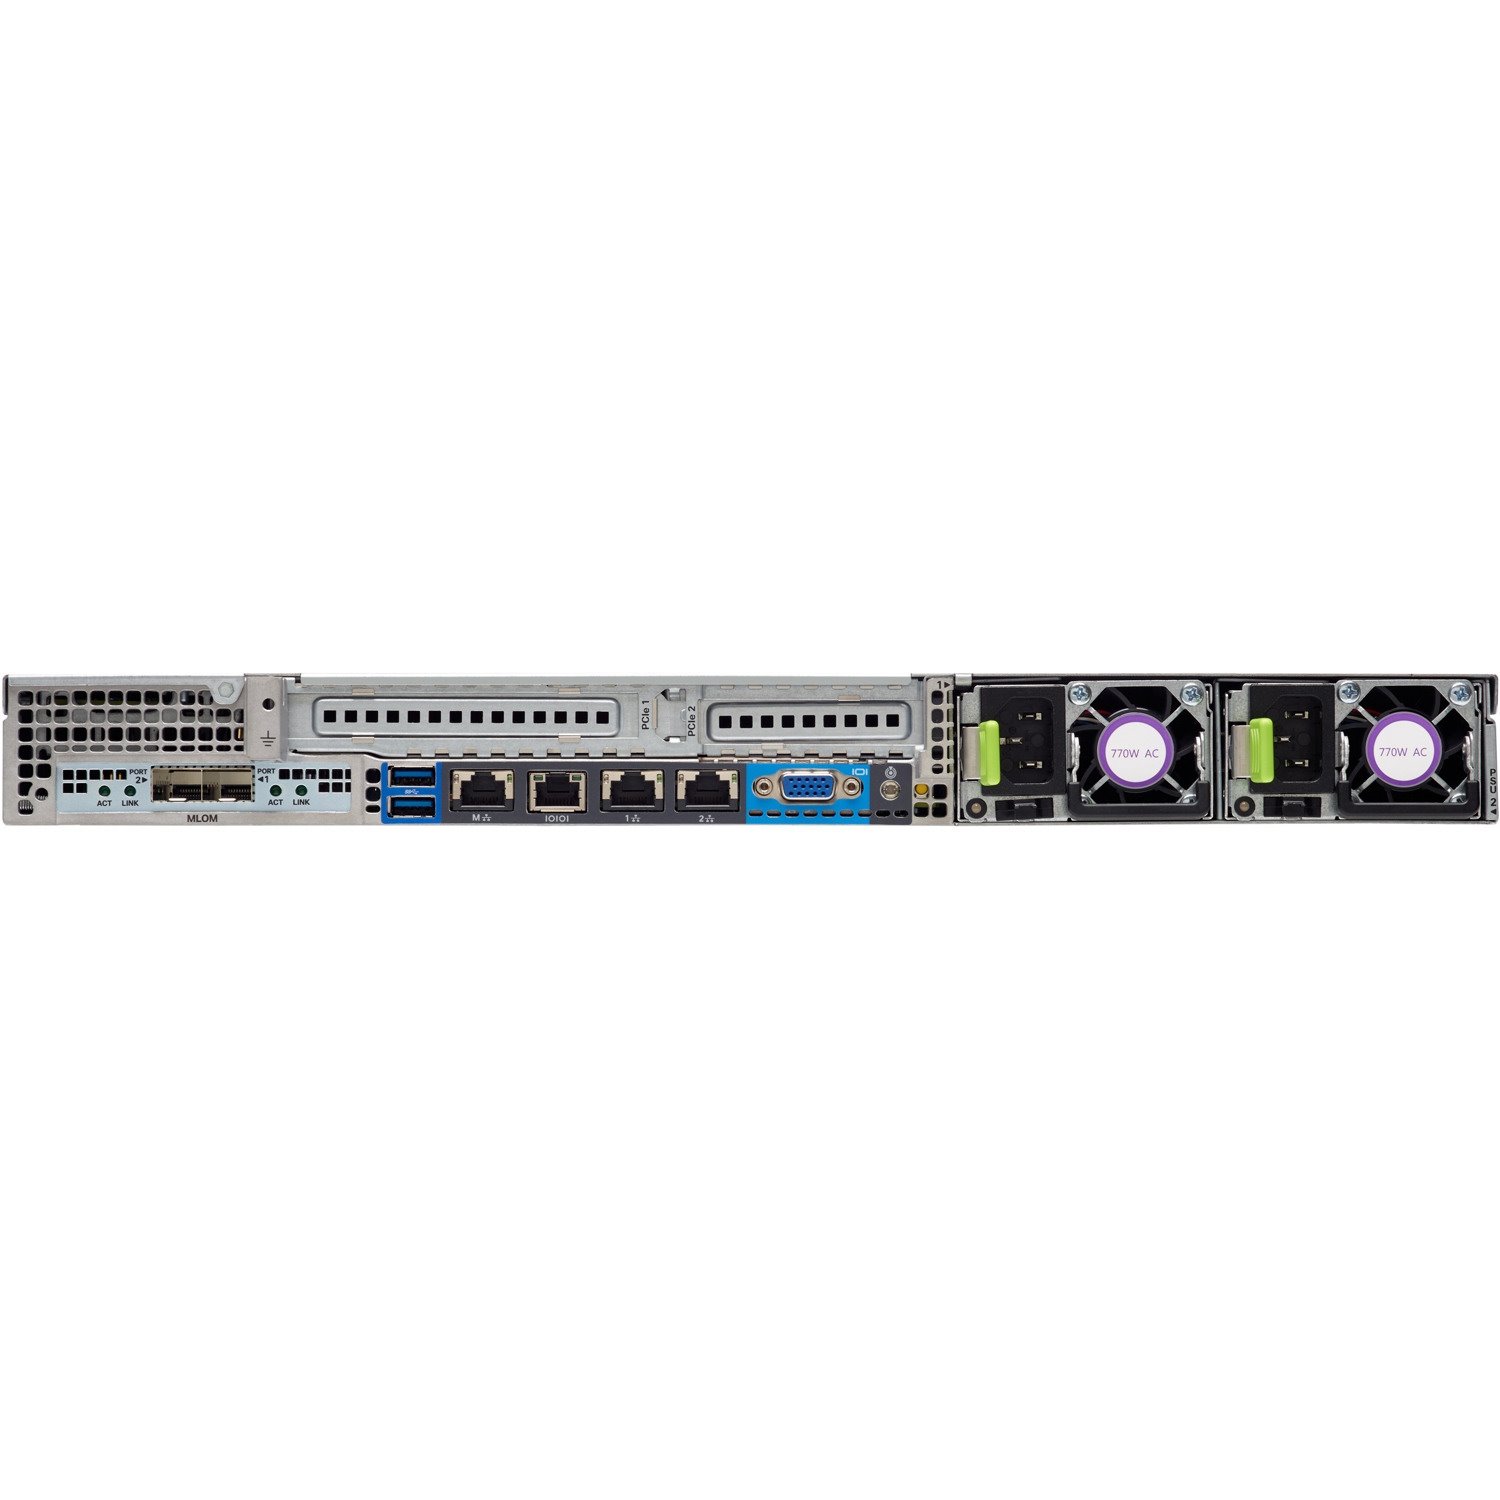 Cisco HyperFlex HX220c M4 1U Rack Server - 2 x Intel Xeon E5-2609 v4 1.70 GHz - 128 GB RAM - 12Gb/s SAS Controller